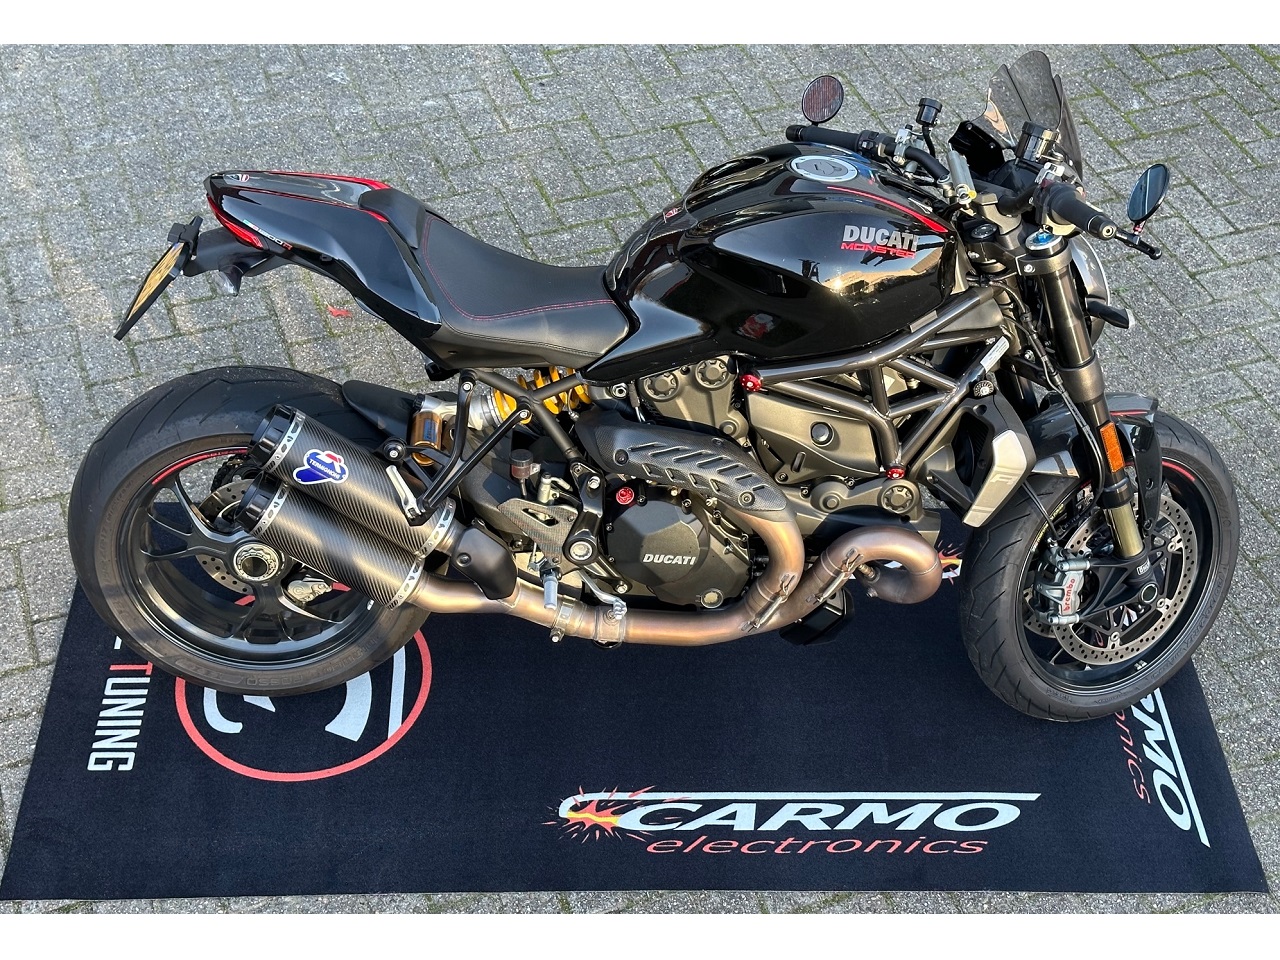 CARMO Moto pitlane taller Garaje Alfombra alfombrilla